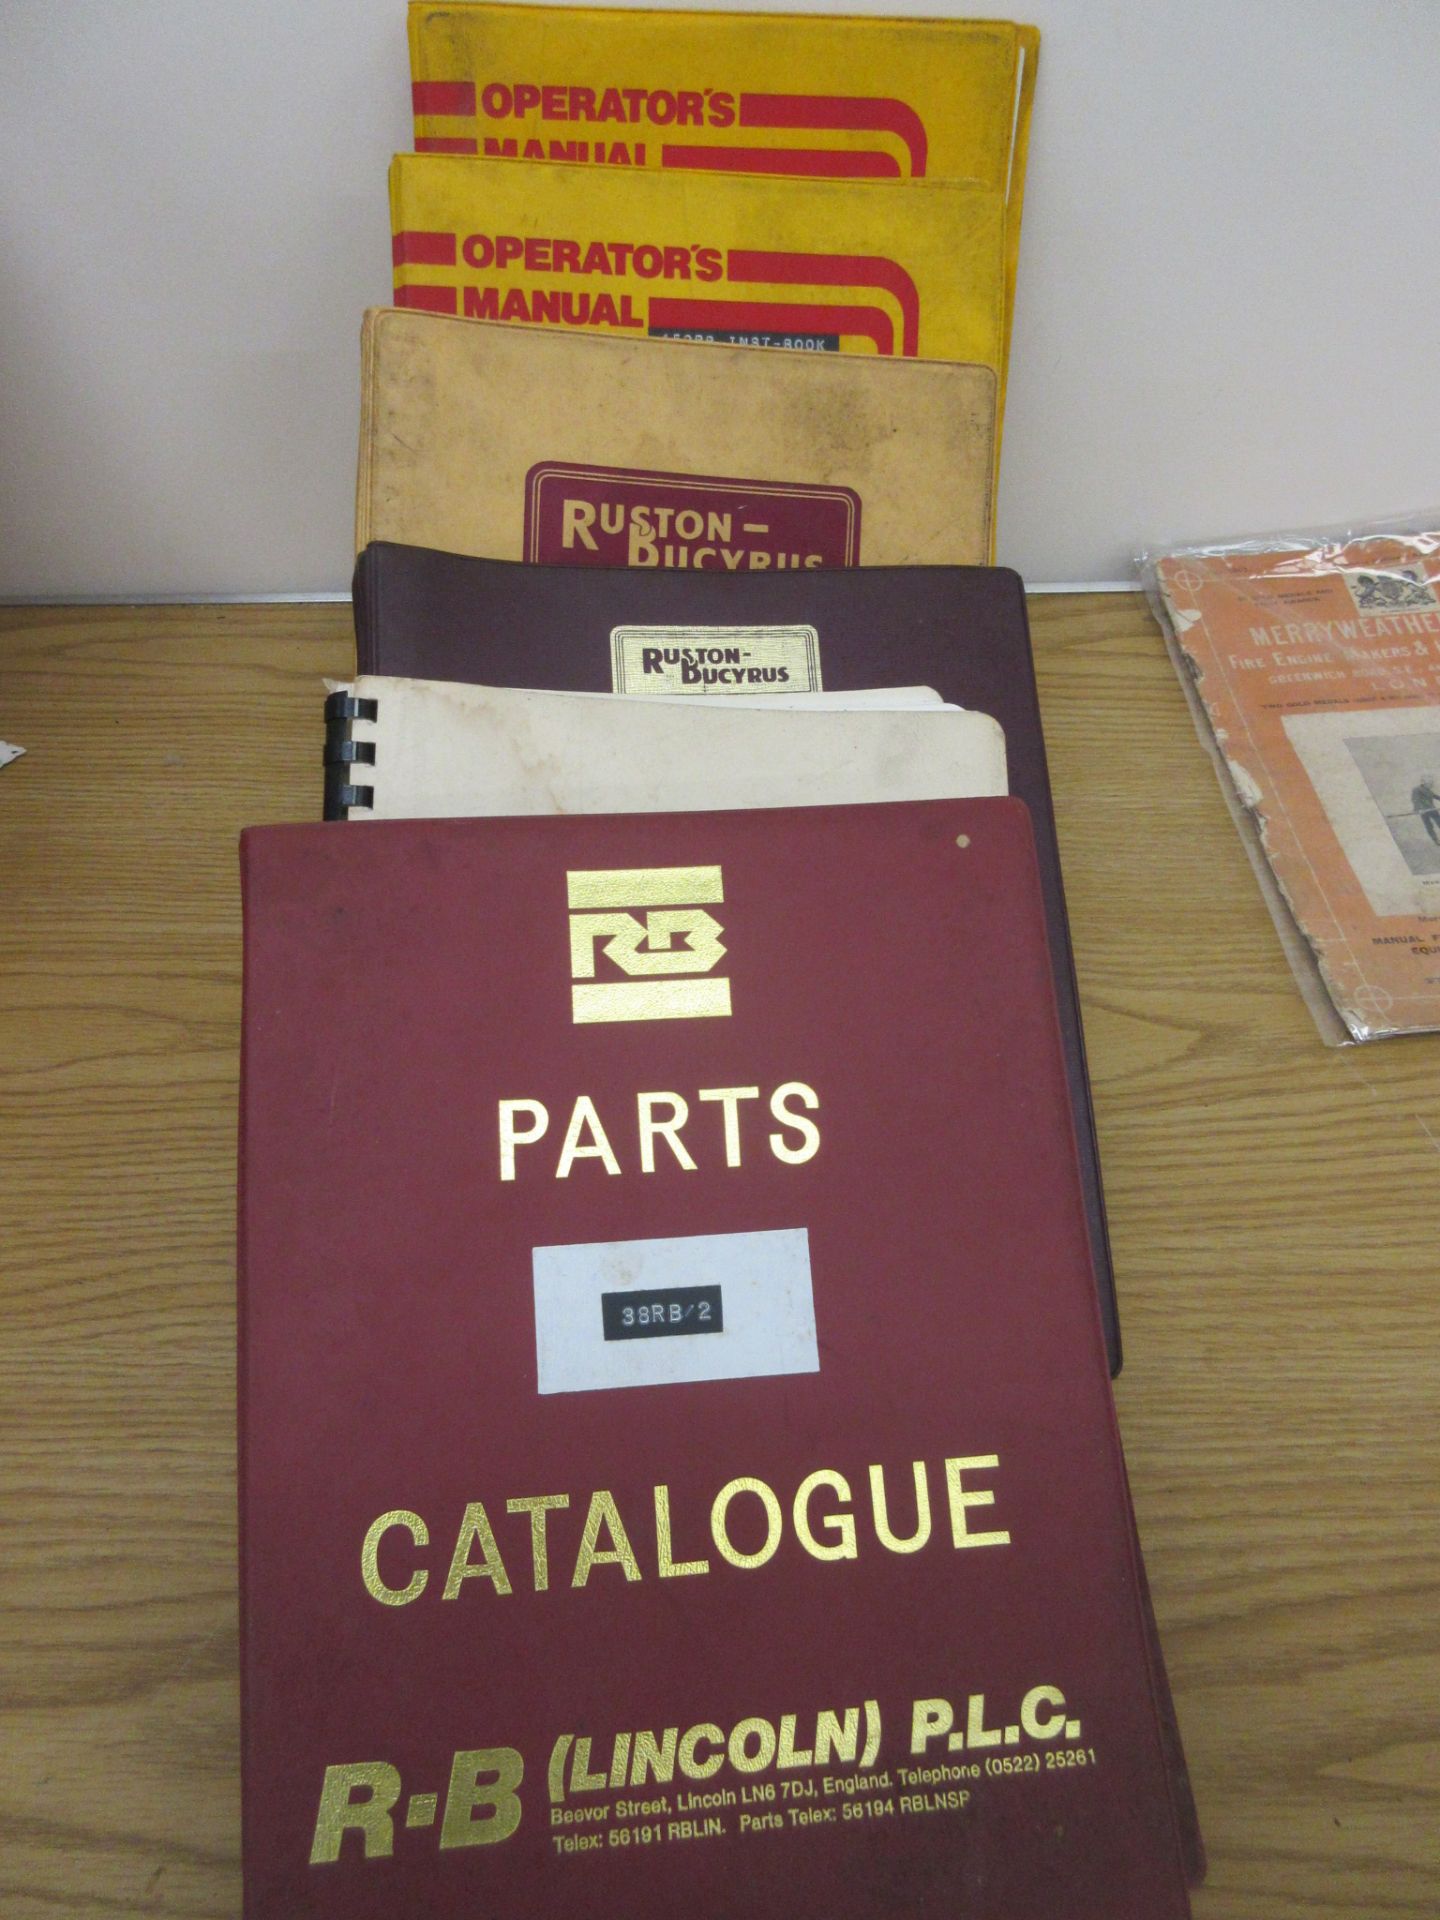 Ruston Bucyrus operators manual parts catalogues & service books (6)